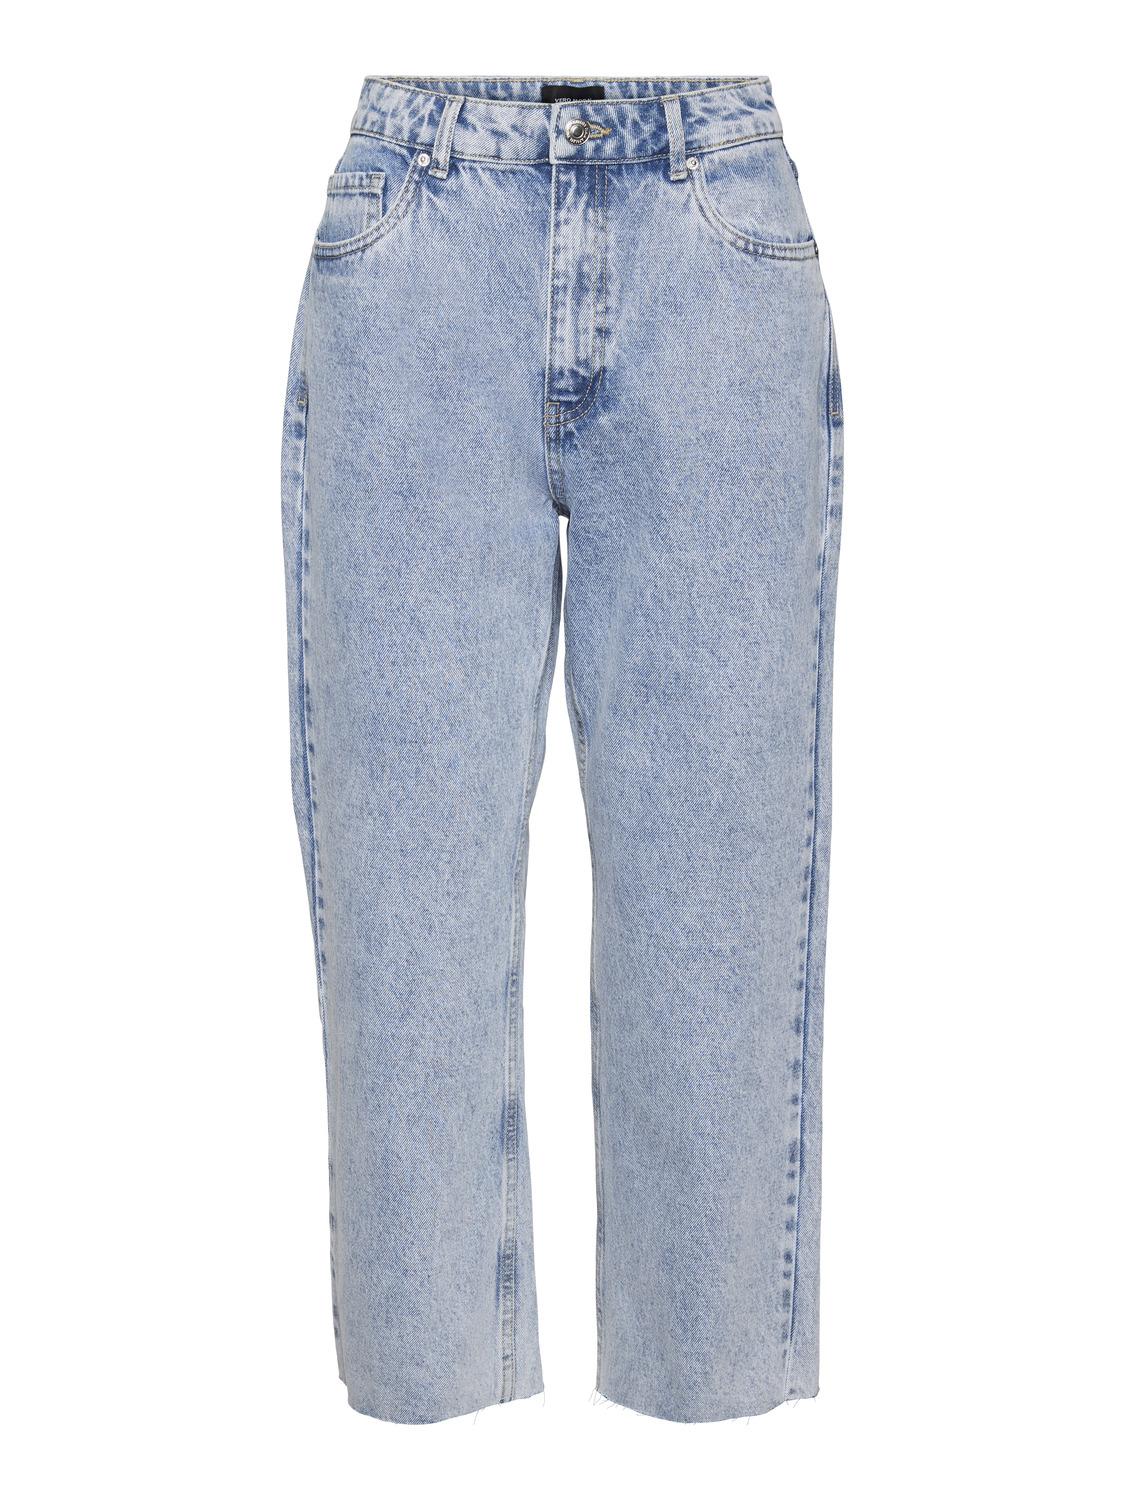 Kithy Jeans, Light Blue Denim, W31/L34